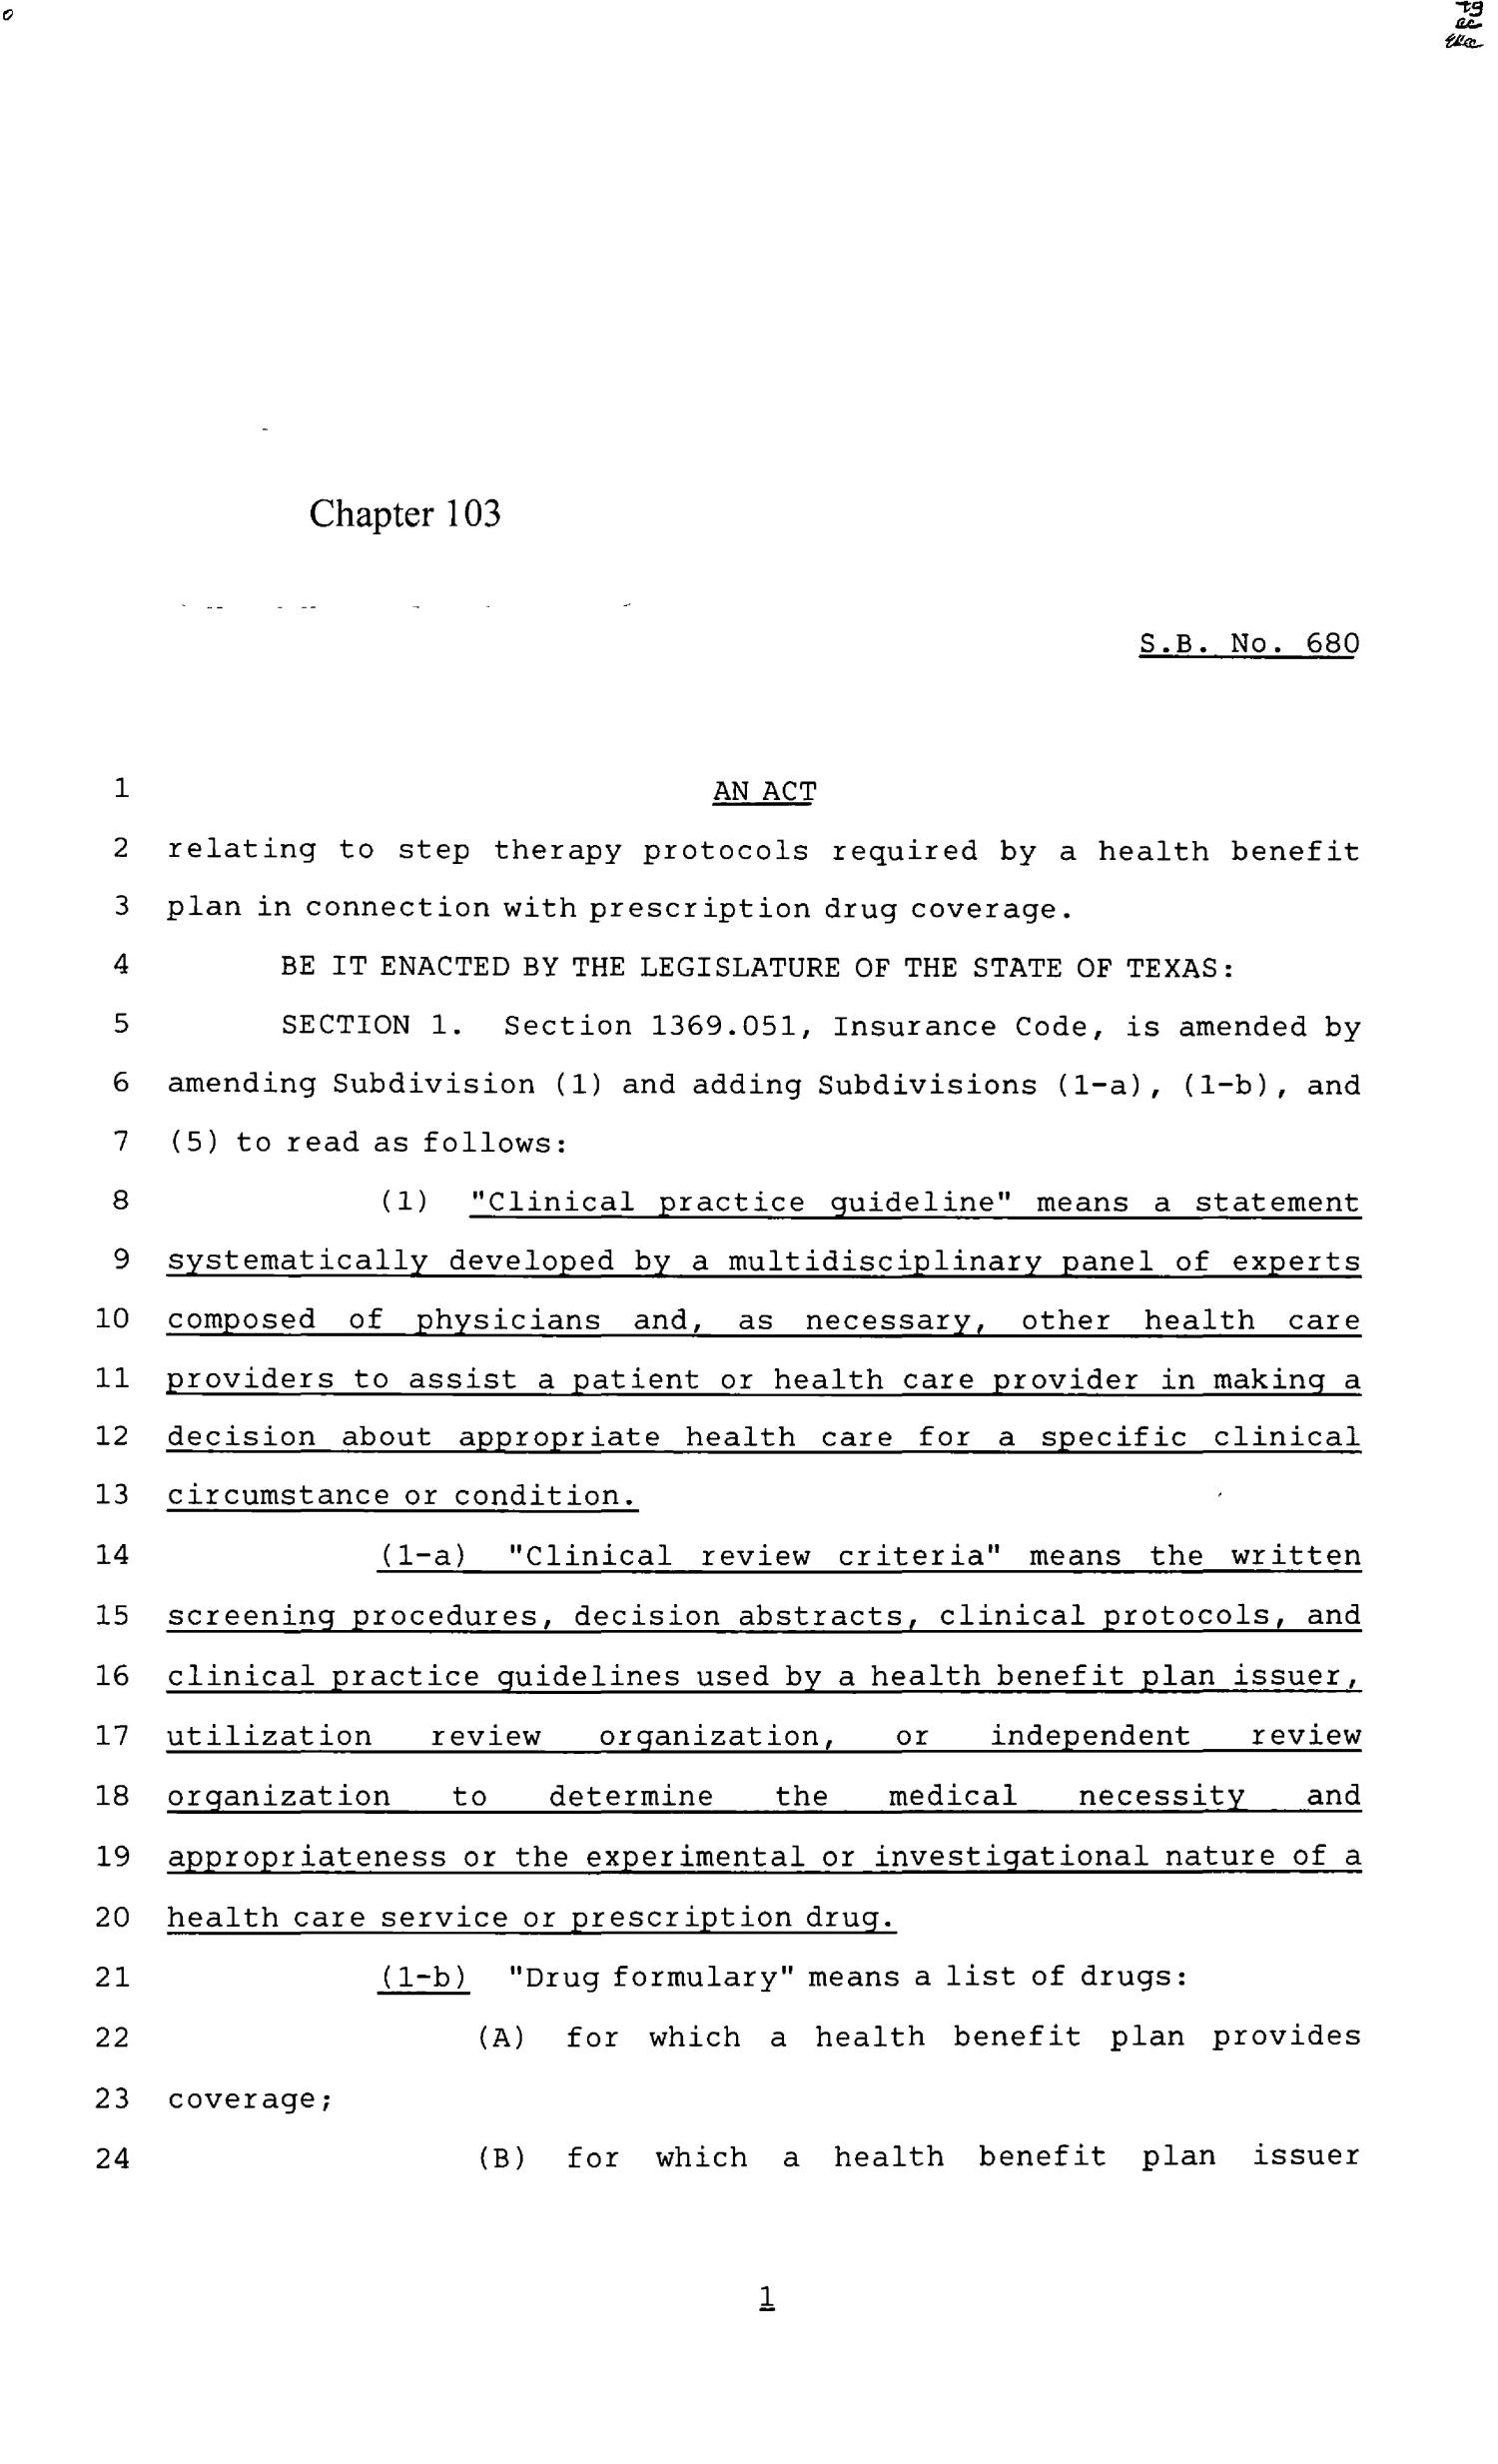 85th Texas Legislature, Regular Session, Senate Bill 680, Chapter 103